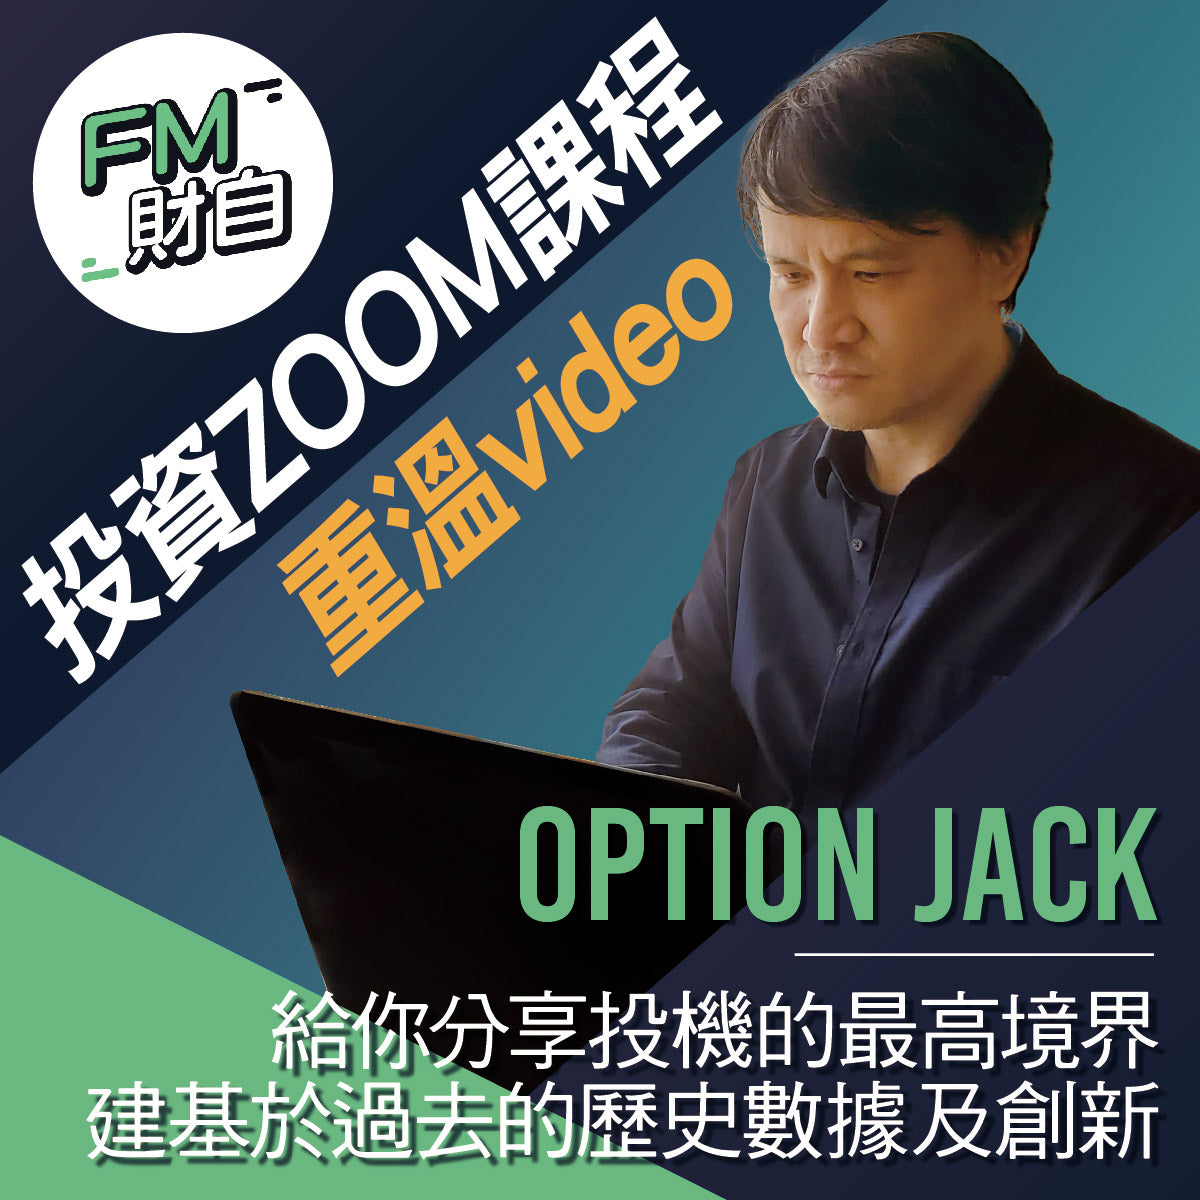 Option Jack帶你穿越牛熊：建基於過去的歷史數據及創新 (ZOOM課程重溫VIDEO)